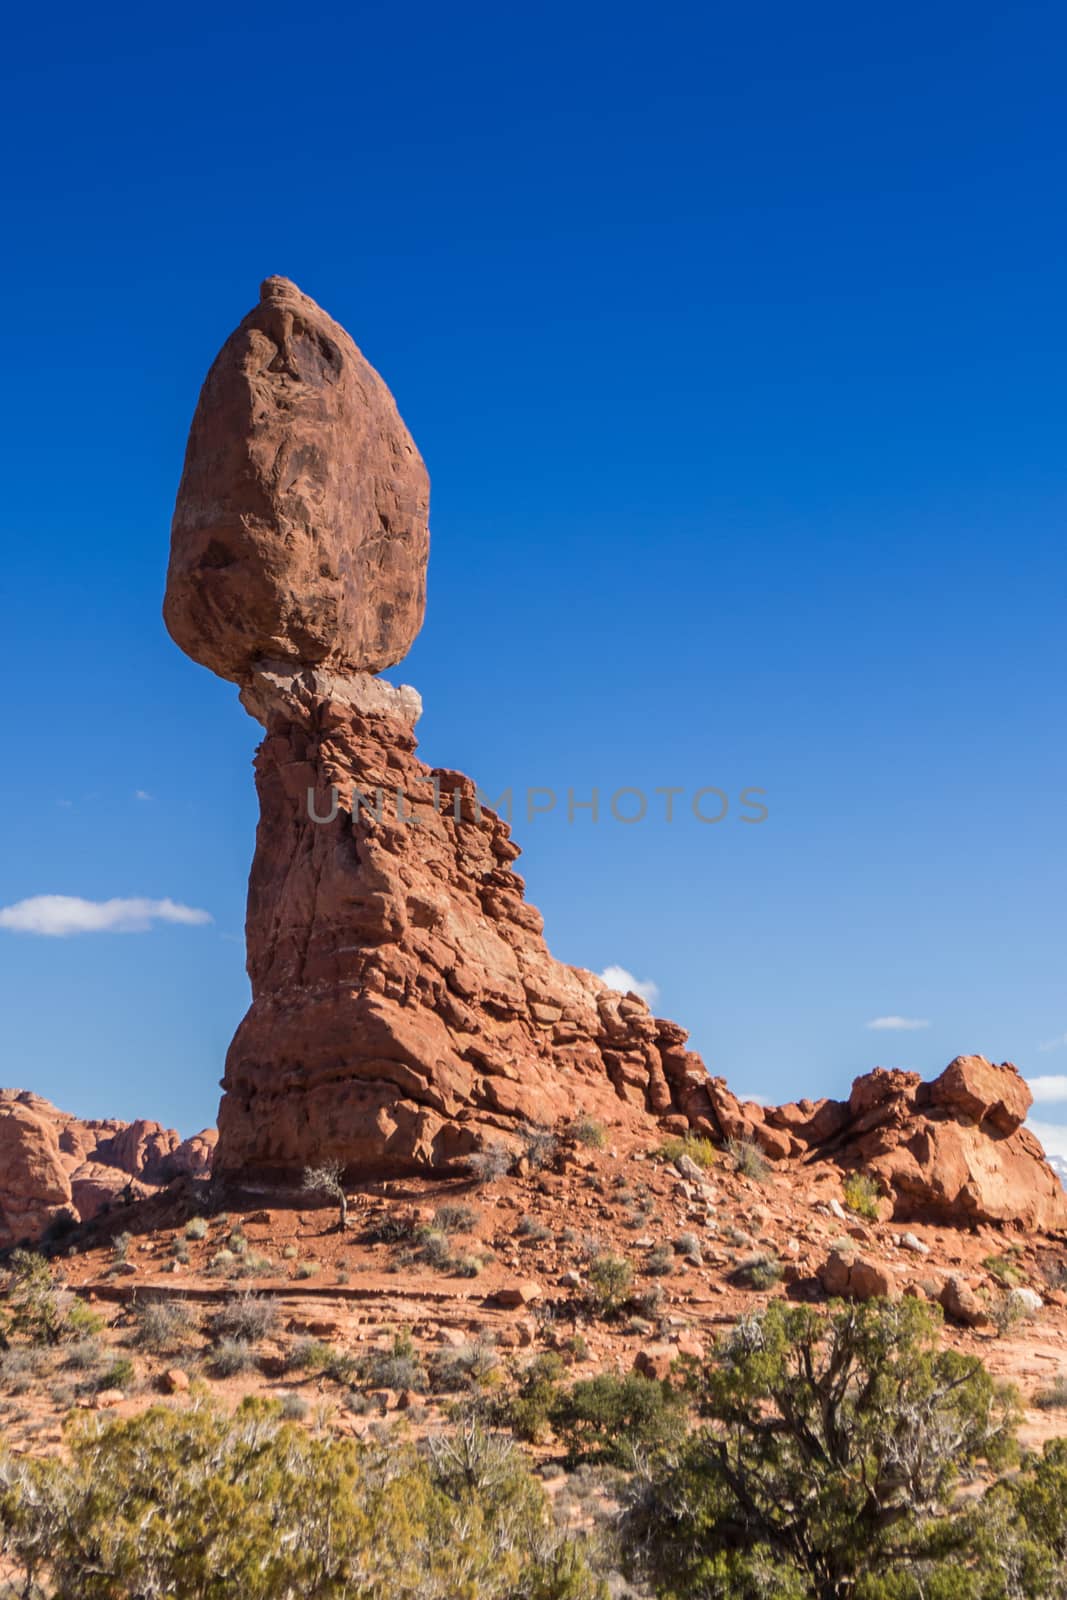 Balancing rock at Arches national park by kb79